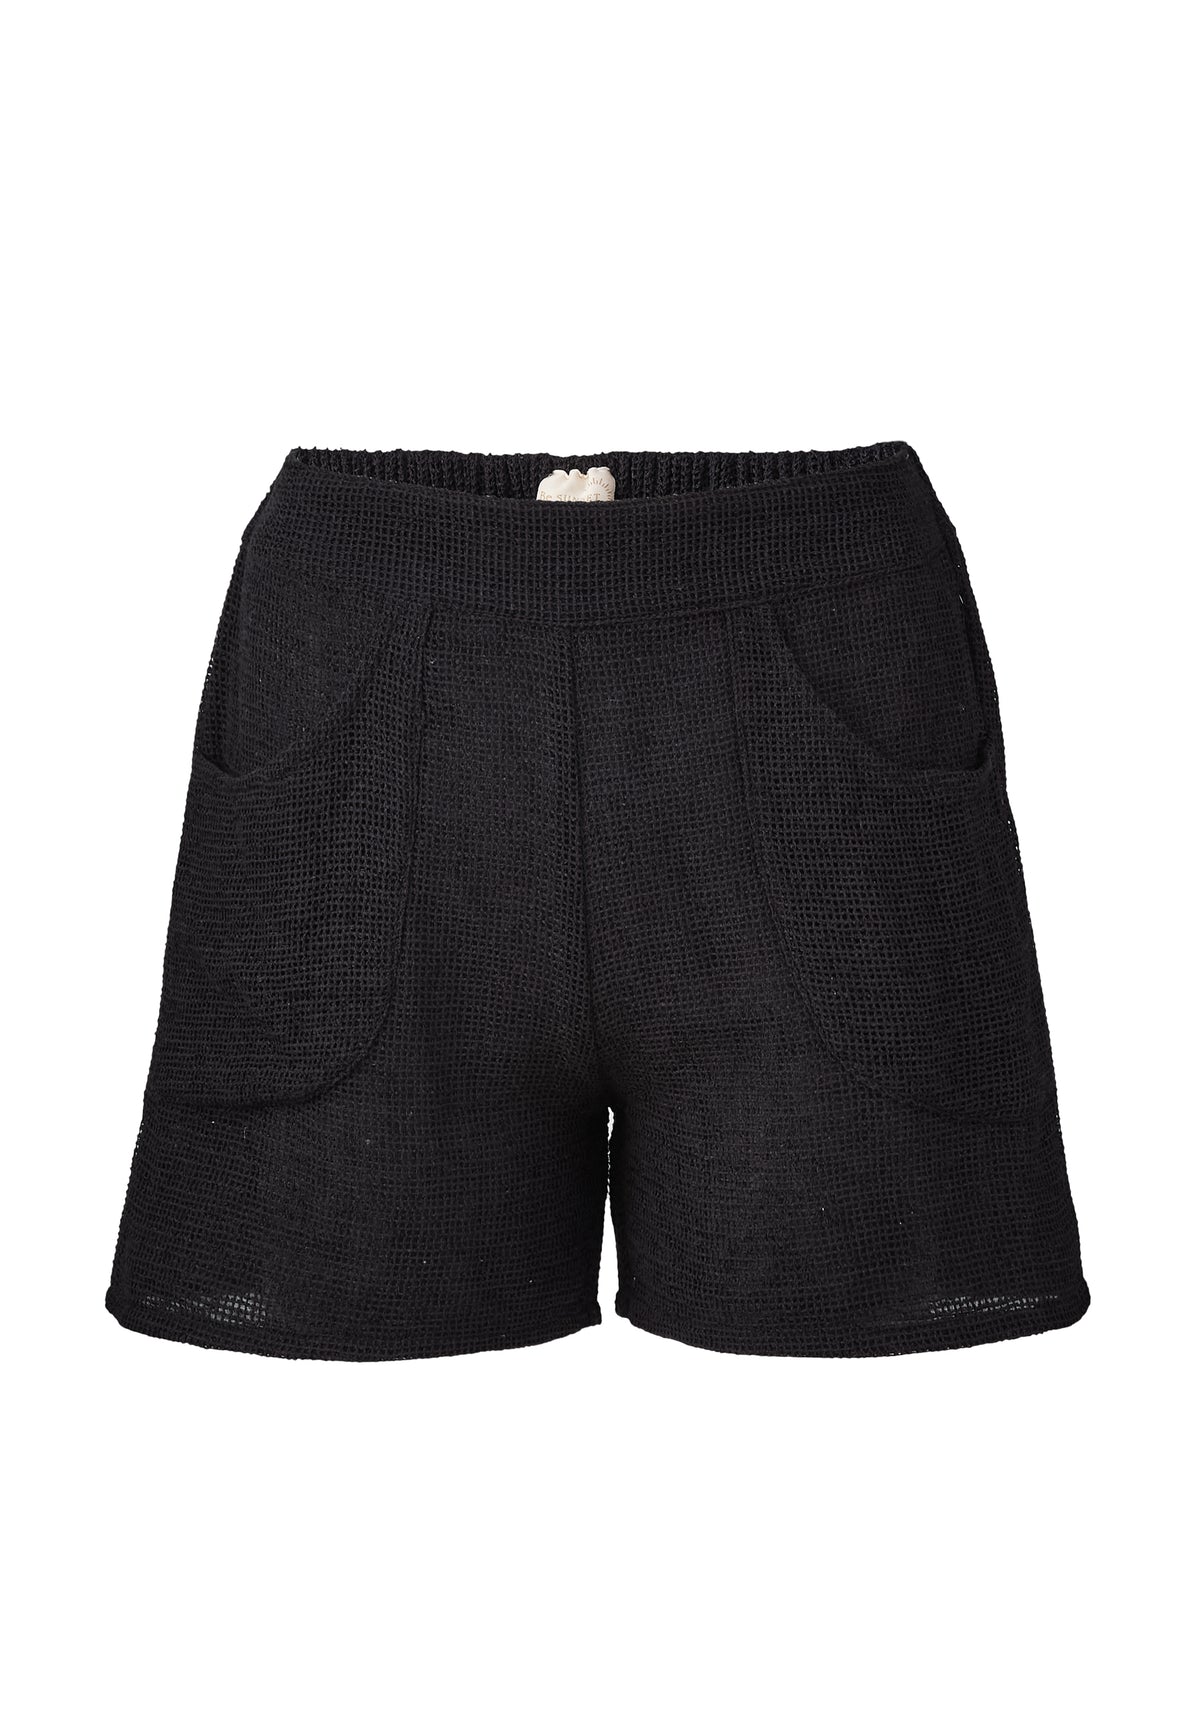 Bay Black Shorts